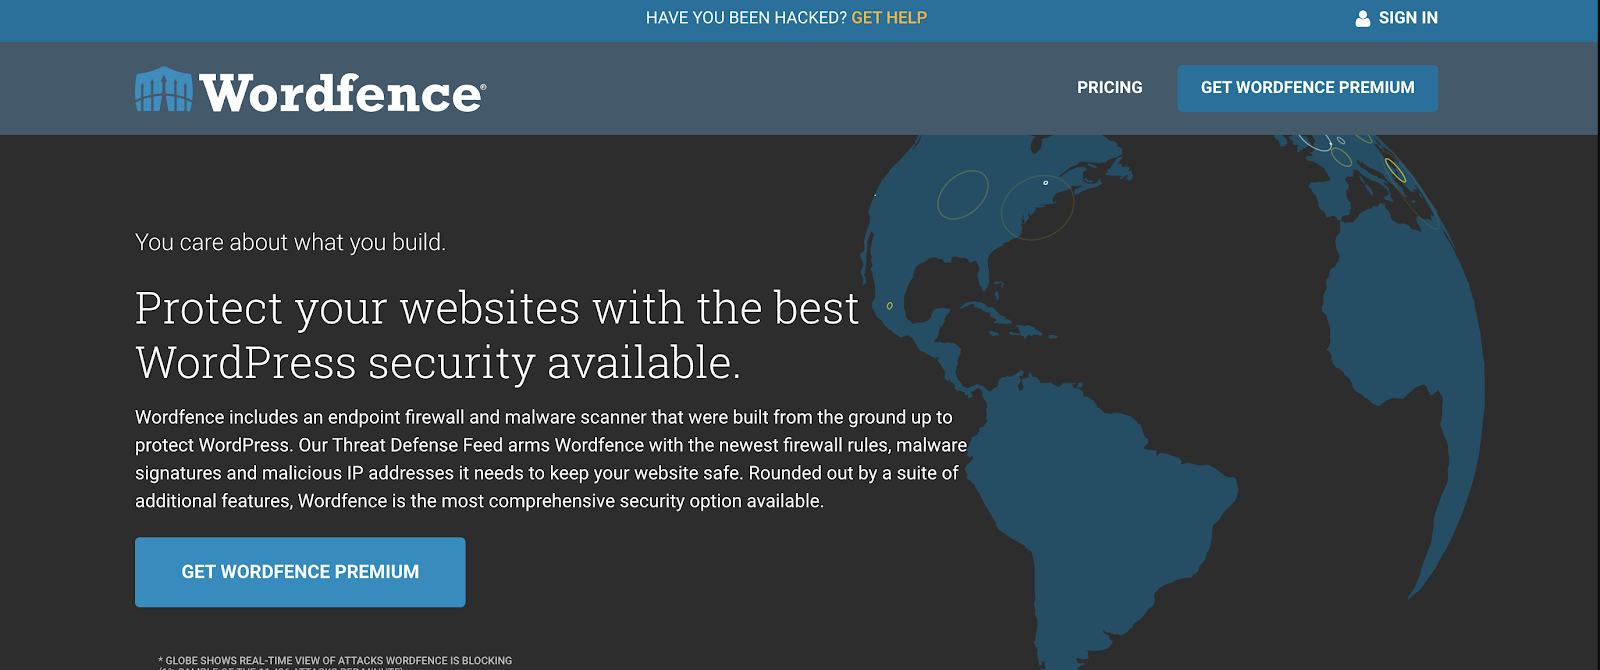 Wordfence Security for WordPress Homepage Screenshot